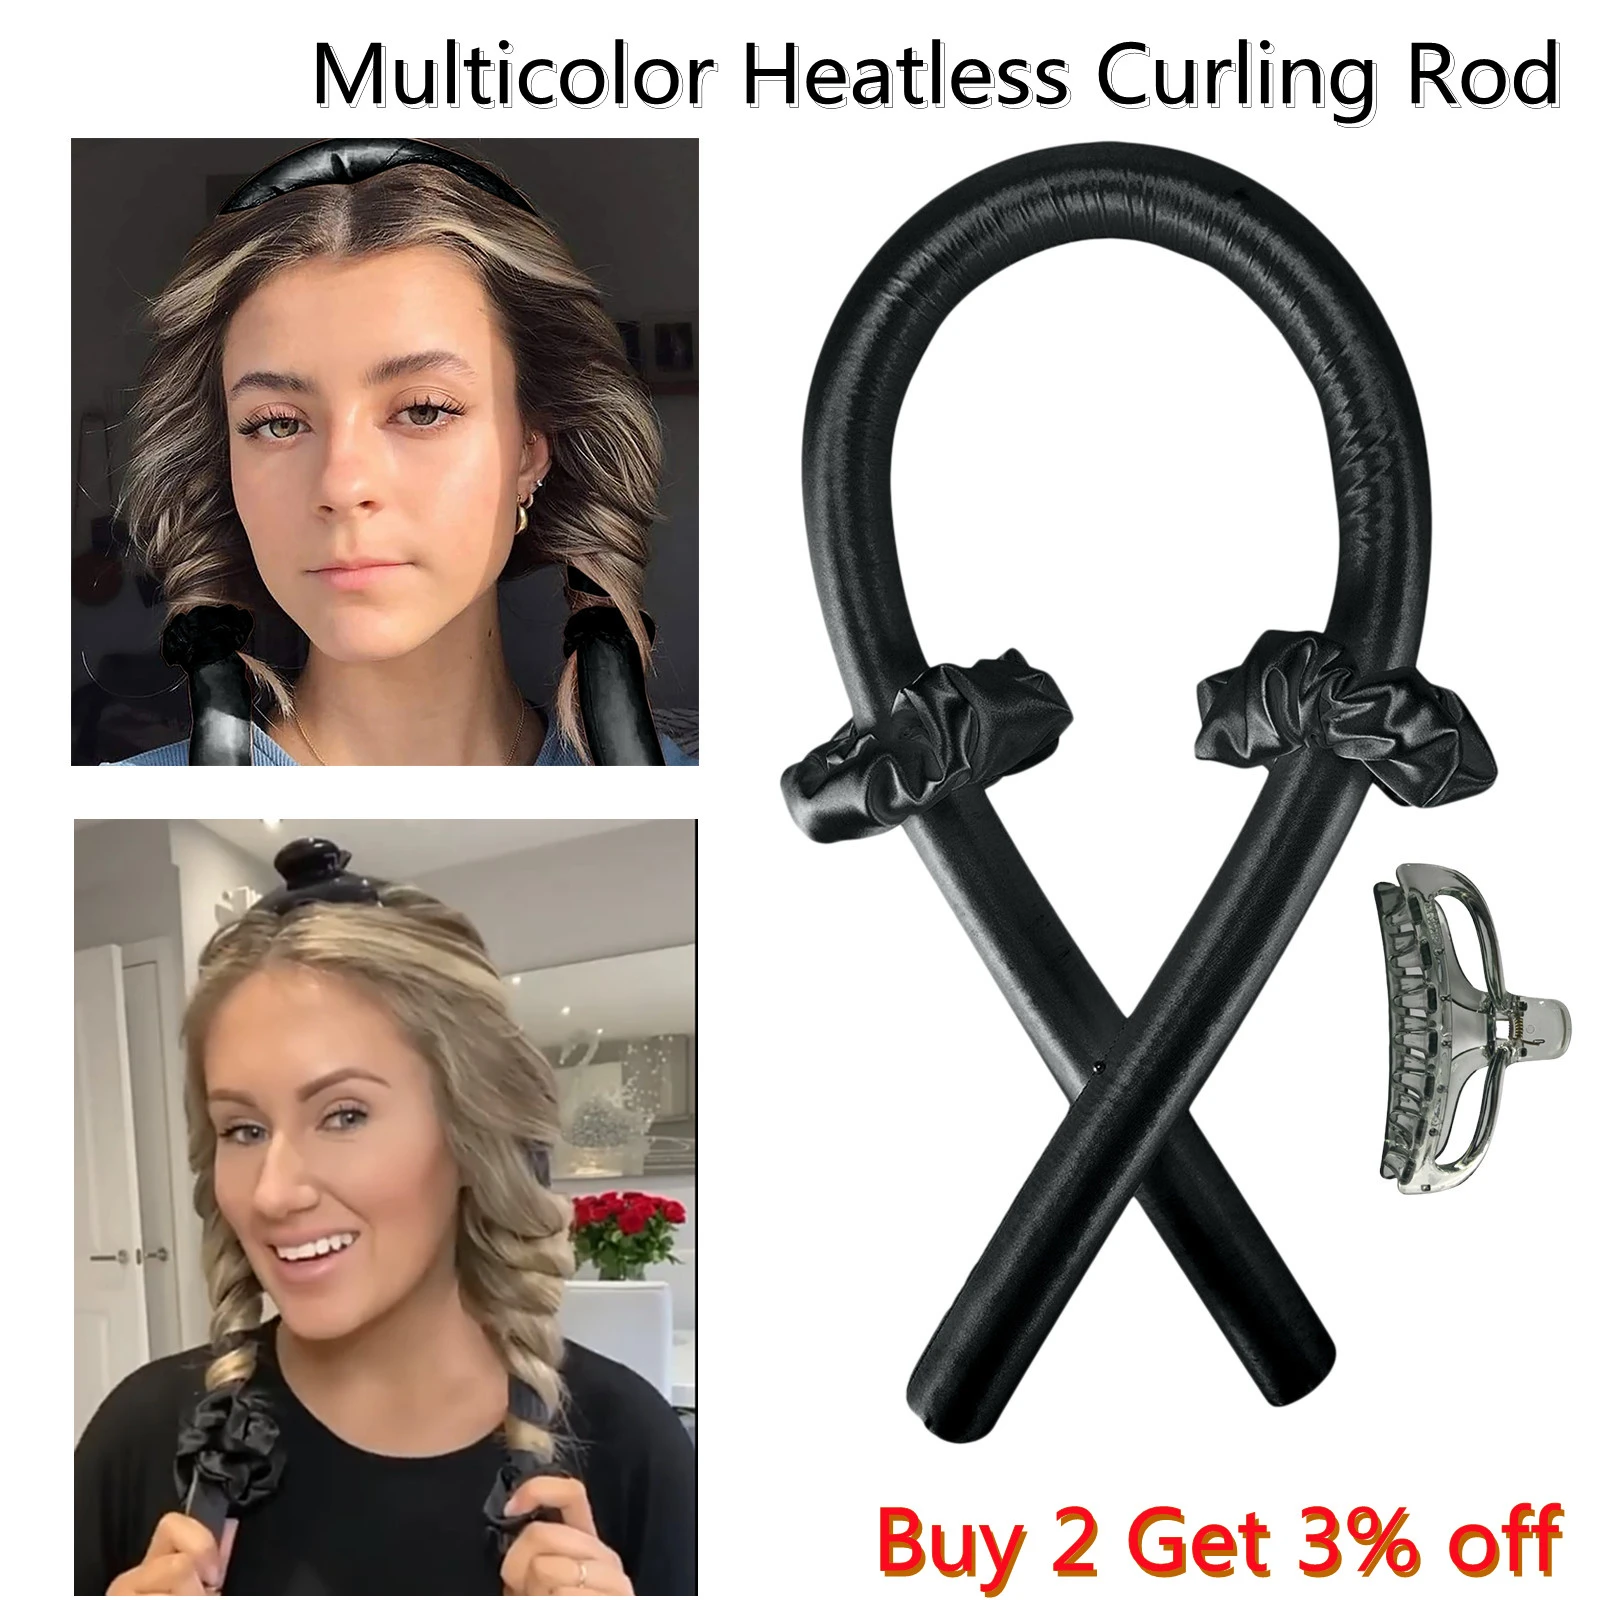 Heatless Curling Rod Headband Lazy Curler Set Make Hair Soft Shiny No Heat Spiral Pear Flower Curling Iron Modeling Accessories